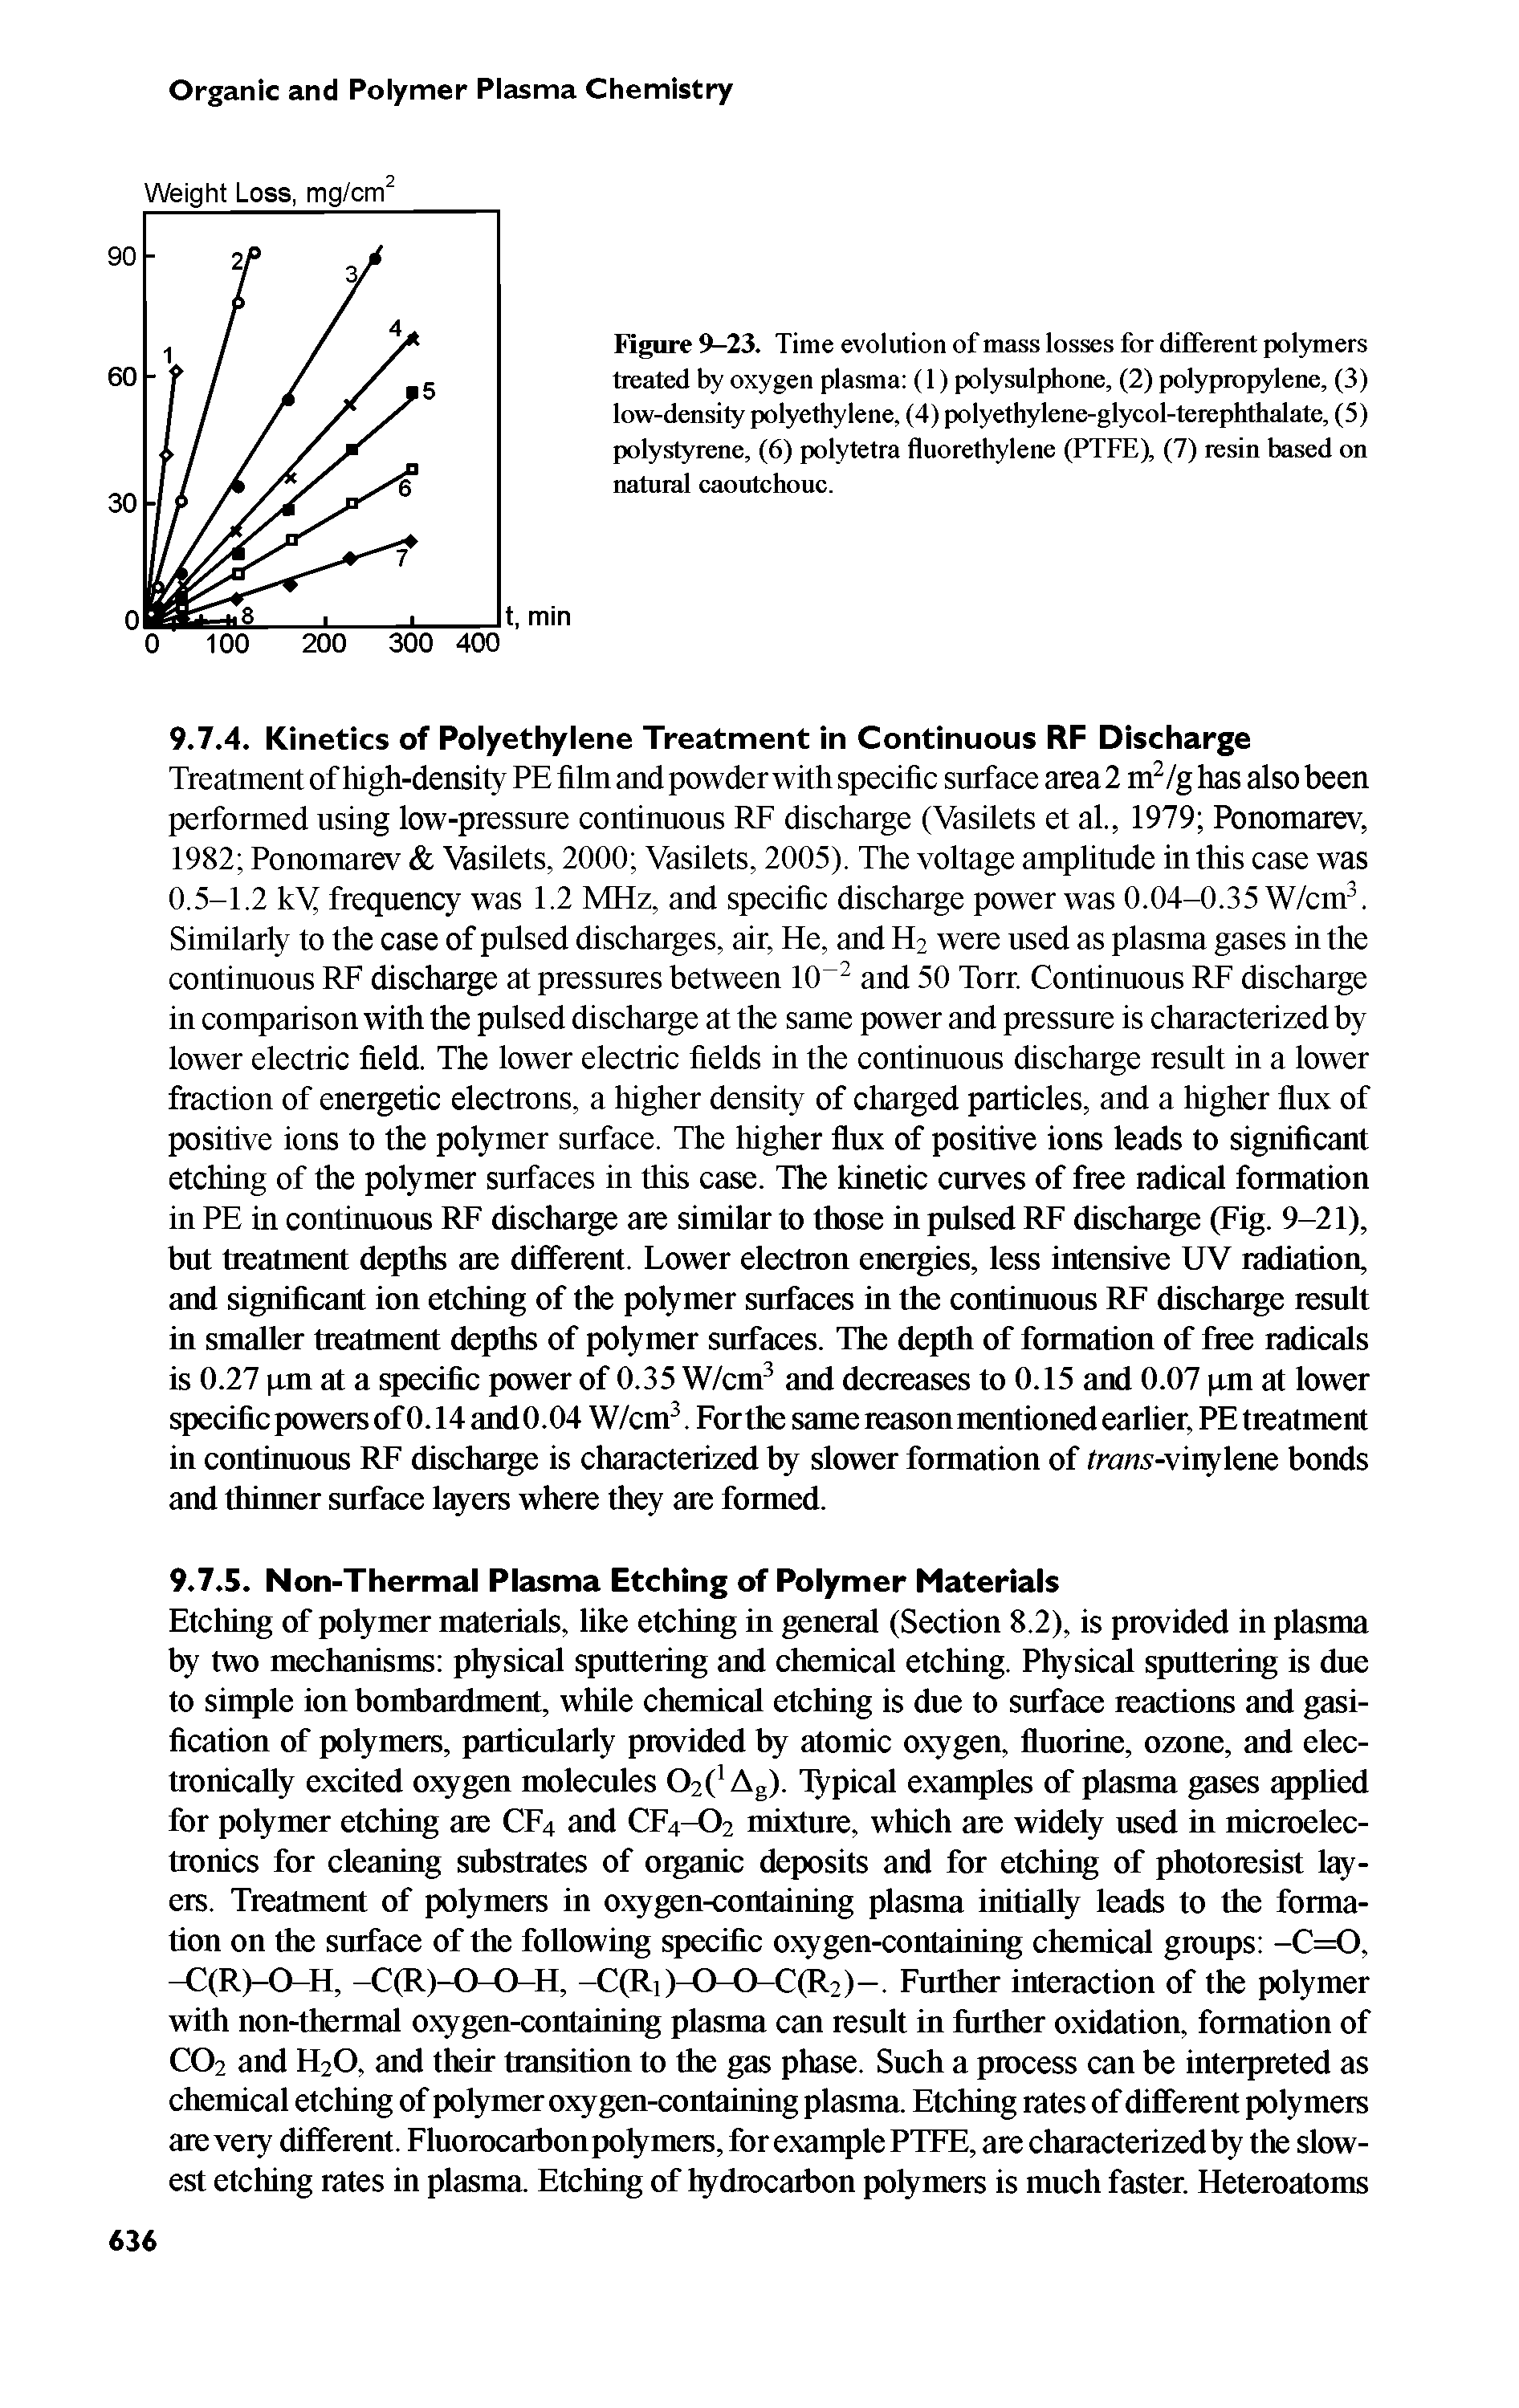 Figure 9-23. Time evolution of mass losses for different polymers treated by oxygen plasma (1) polysulphone, (2) polypropylene, (3) low-density polyethylene, (4) polyethylene-glycol-terephthalate, (5) polystyrene, (6) polytetra fluorethylene (PTFE), (7) resin based on natural caoutchouc.